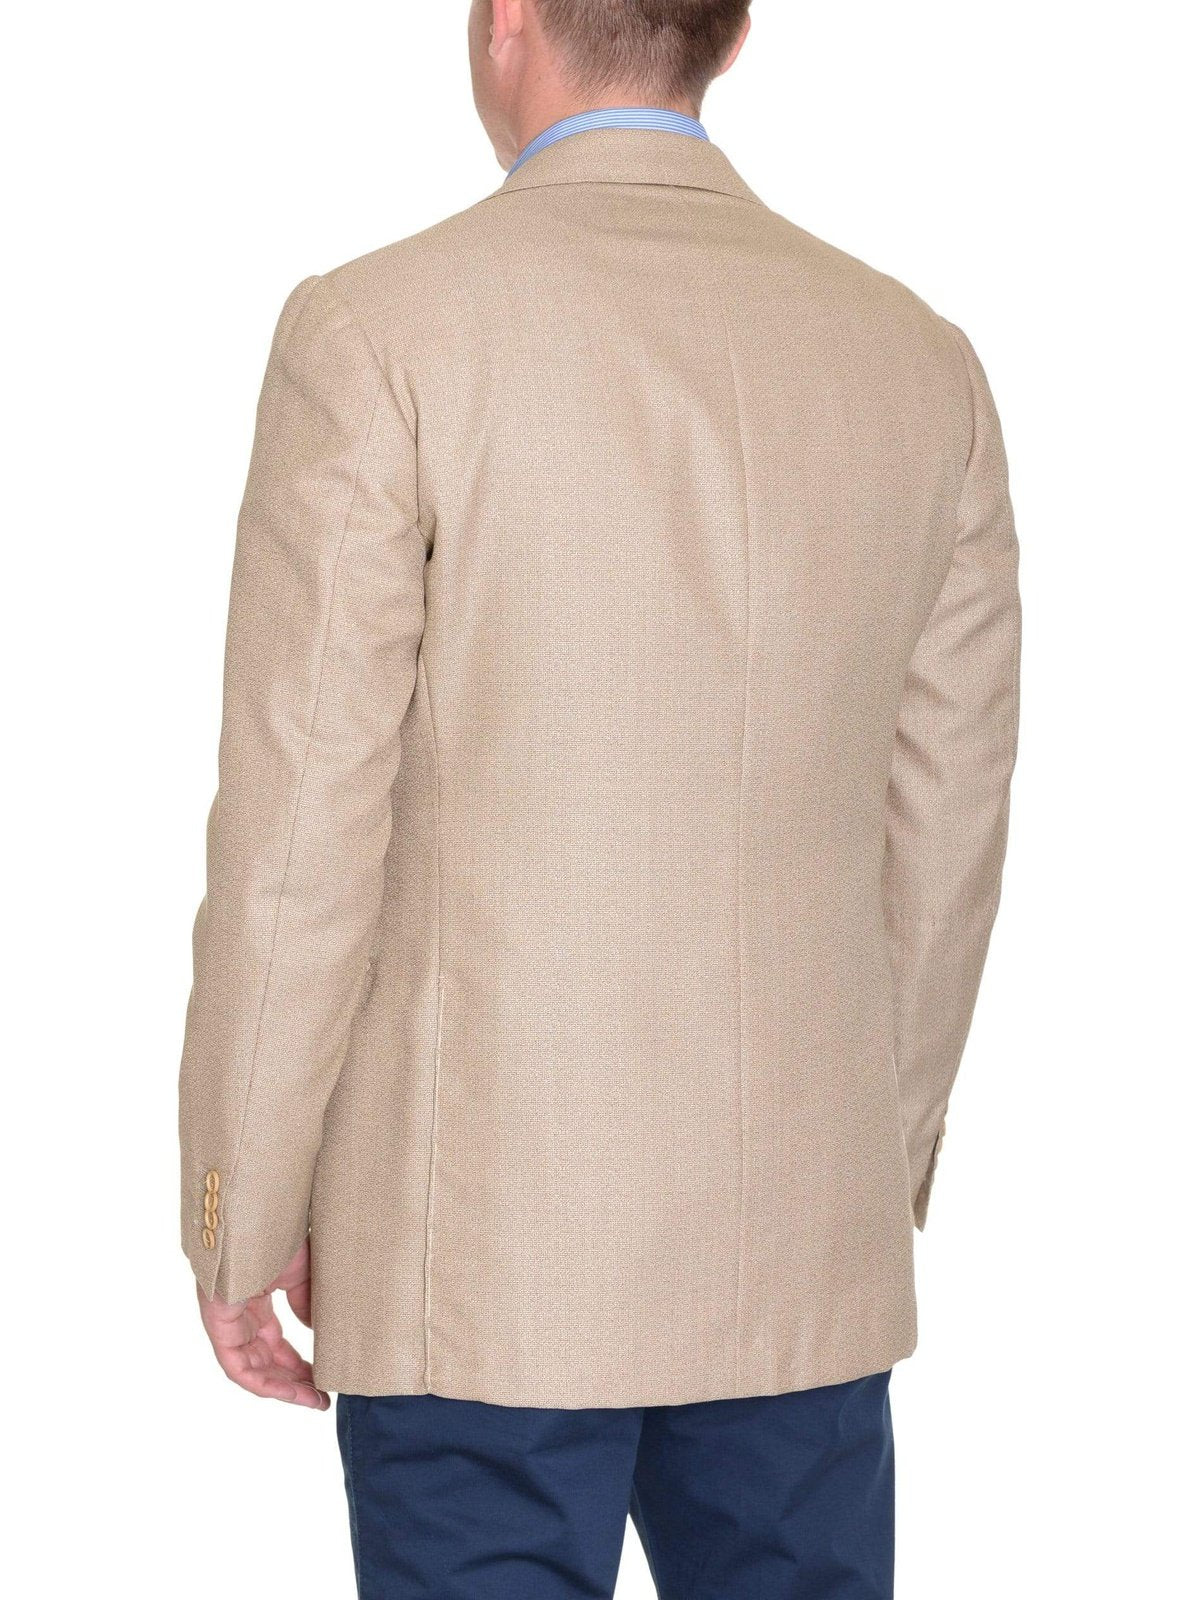 Sartoria Partenopea Italy 40R 50 Tan Beige Wool Silk Men's Blazer Sportcoat - The Suit Depot